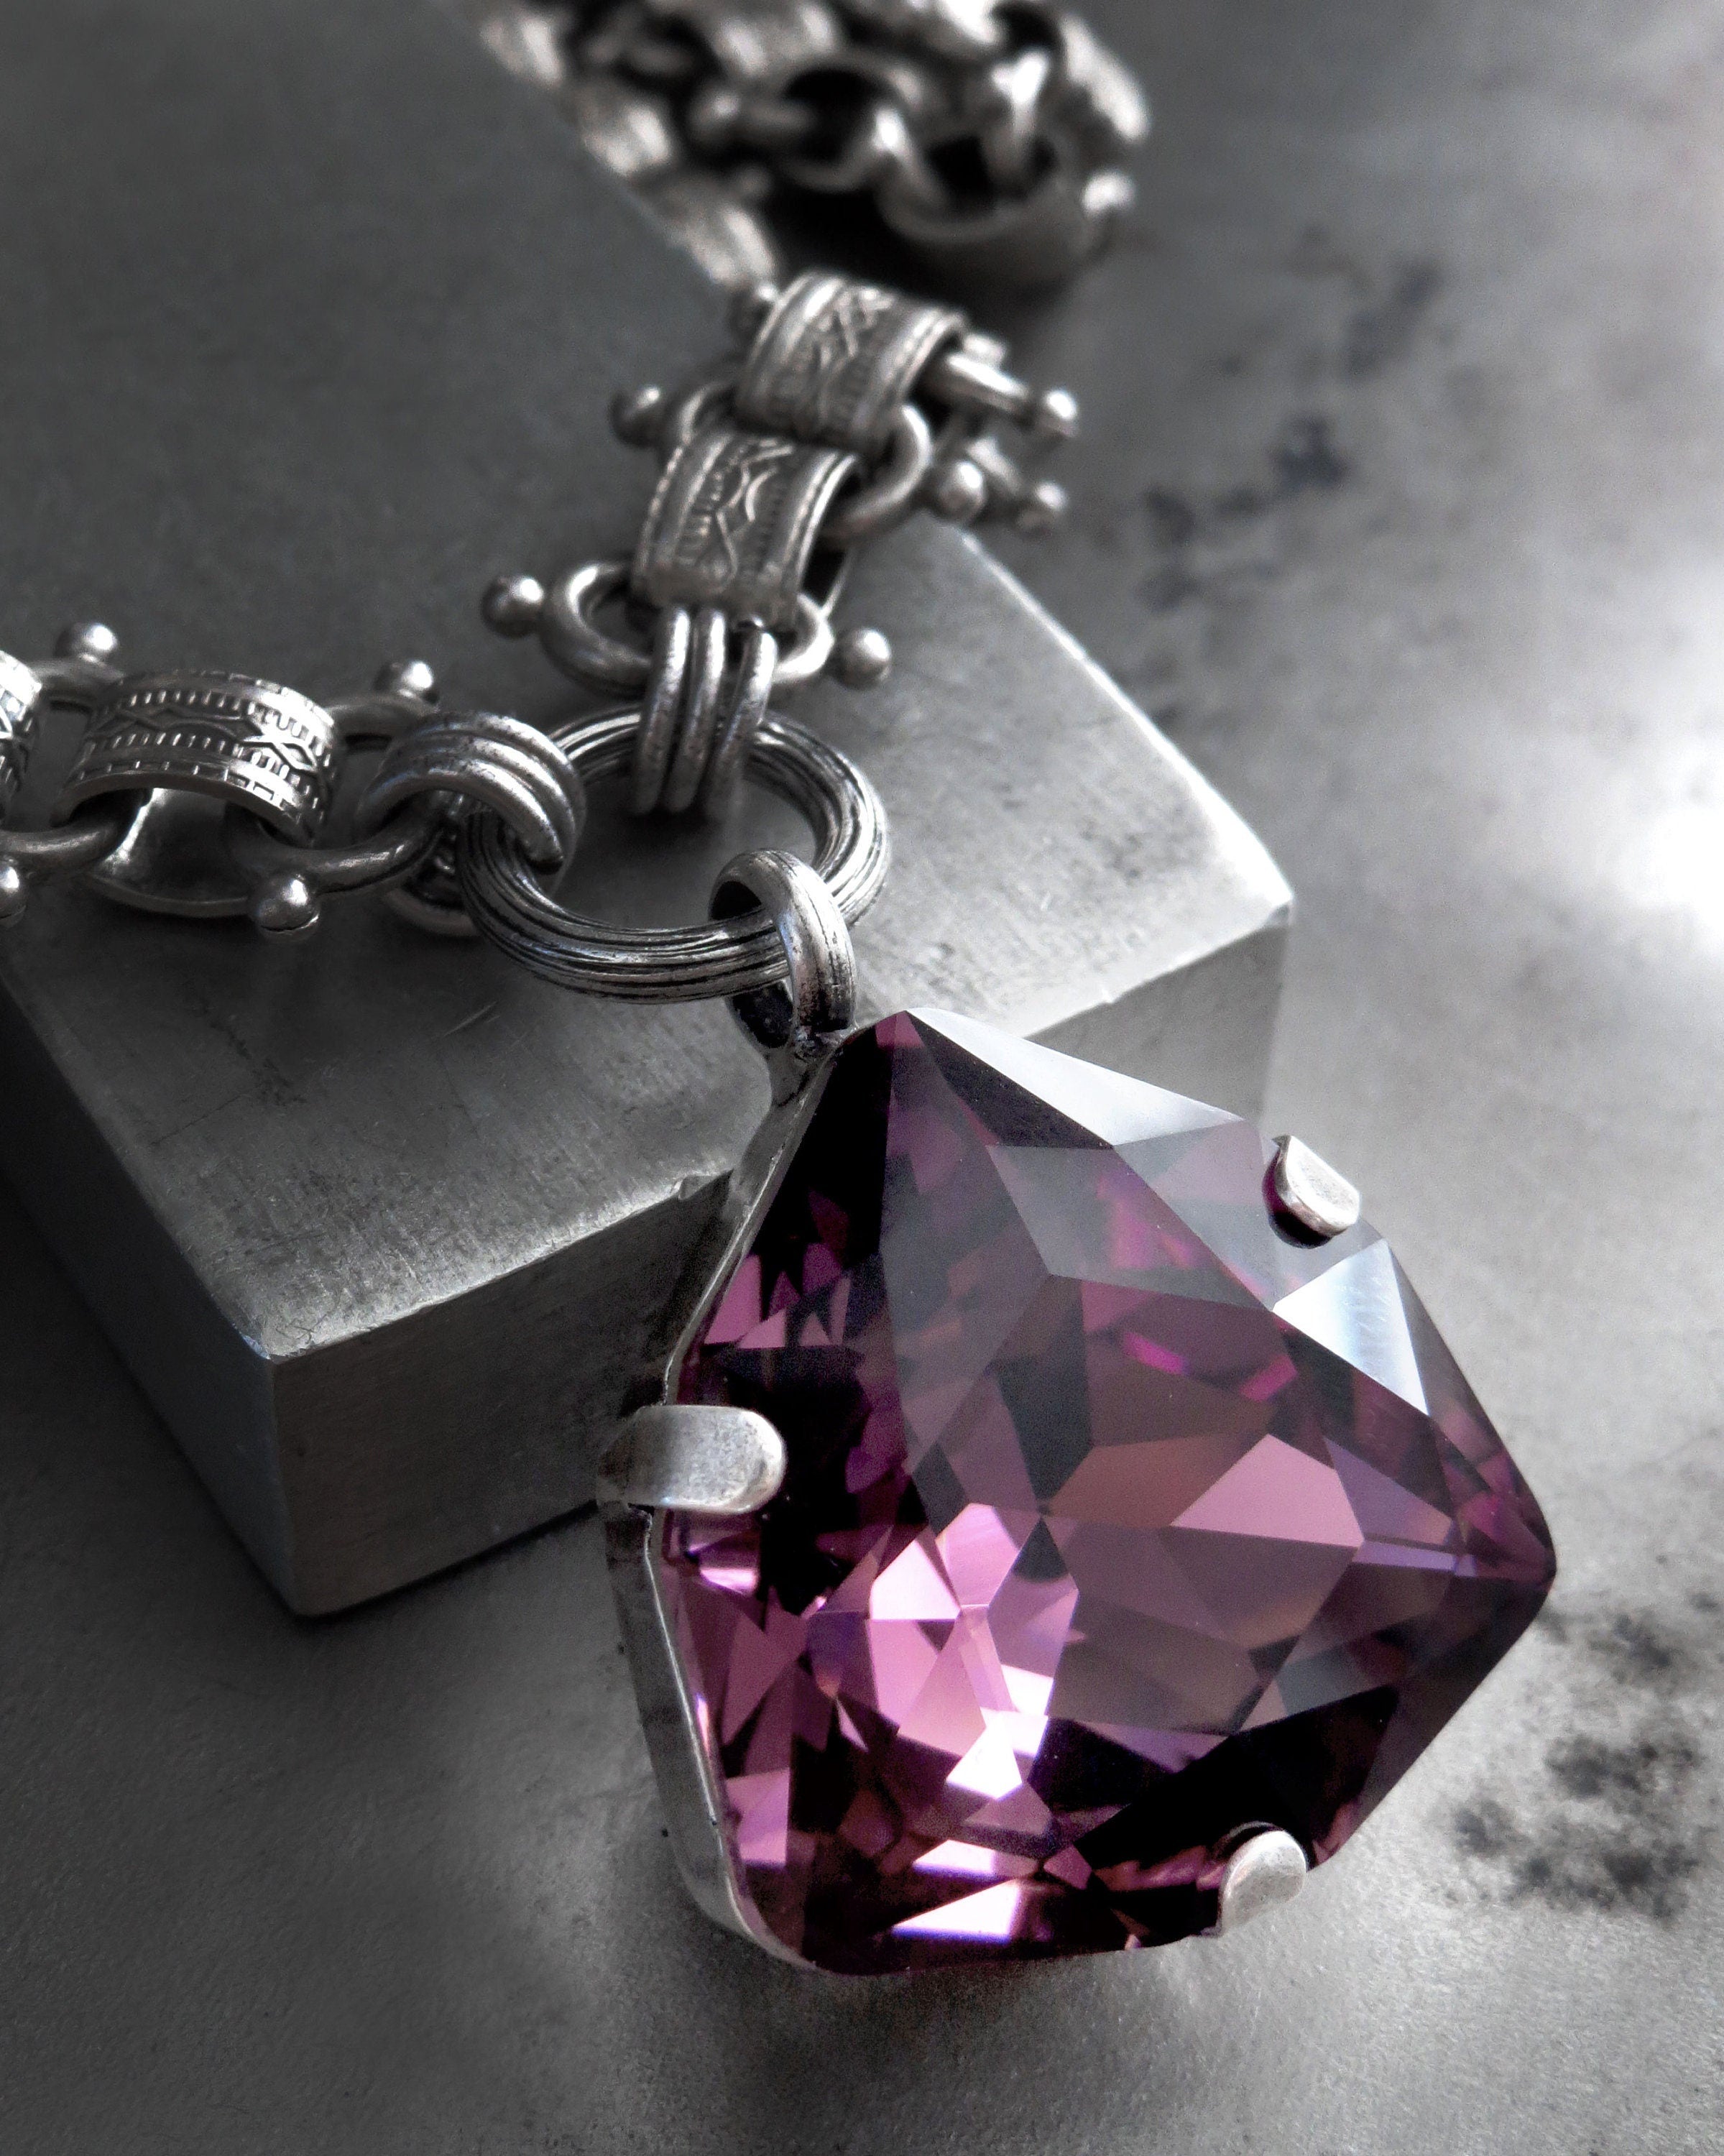 ORACLE - Purple Crystal Pendant Necklace, Rare Trilliant 'Amethyst' Crystal - Vintage Style Medieval Chain, Purple Halloween Wedding Jewelry